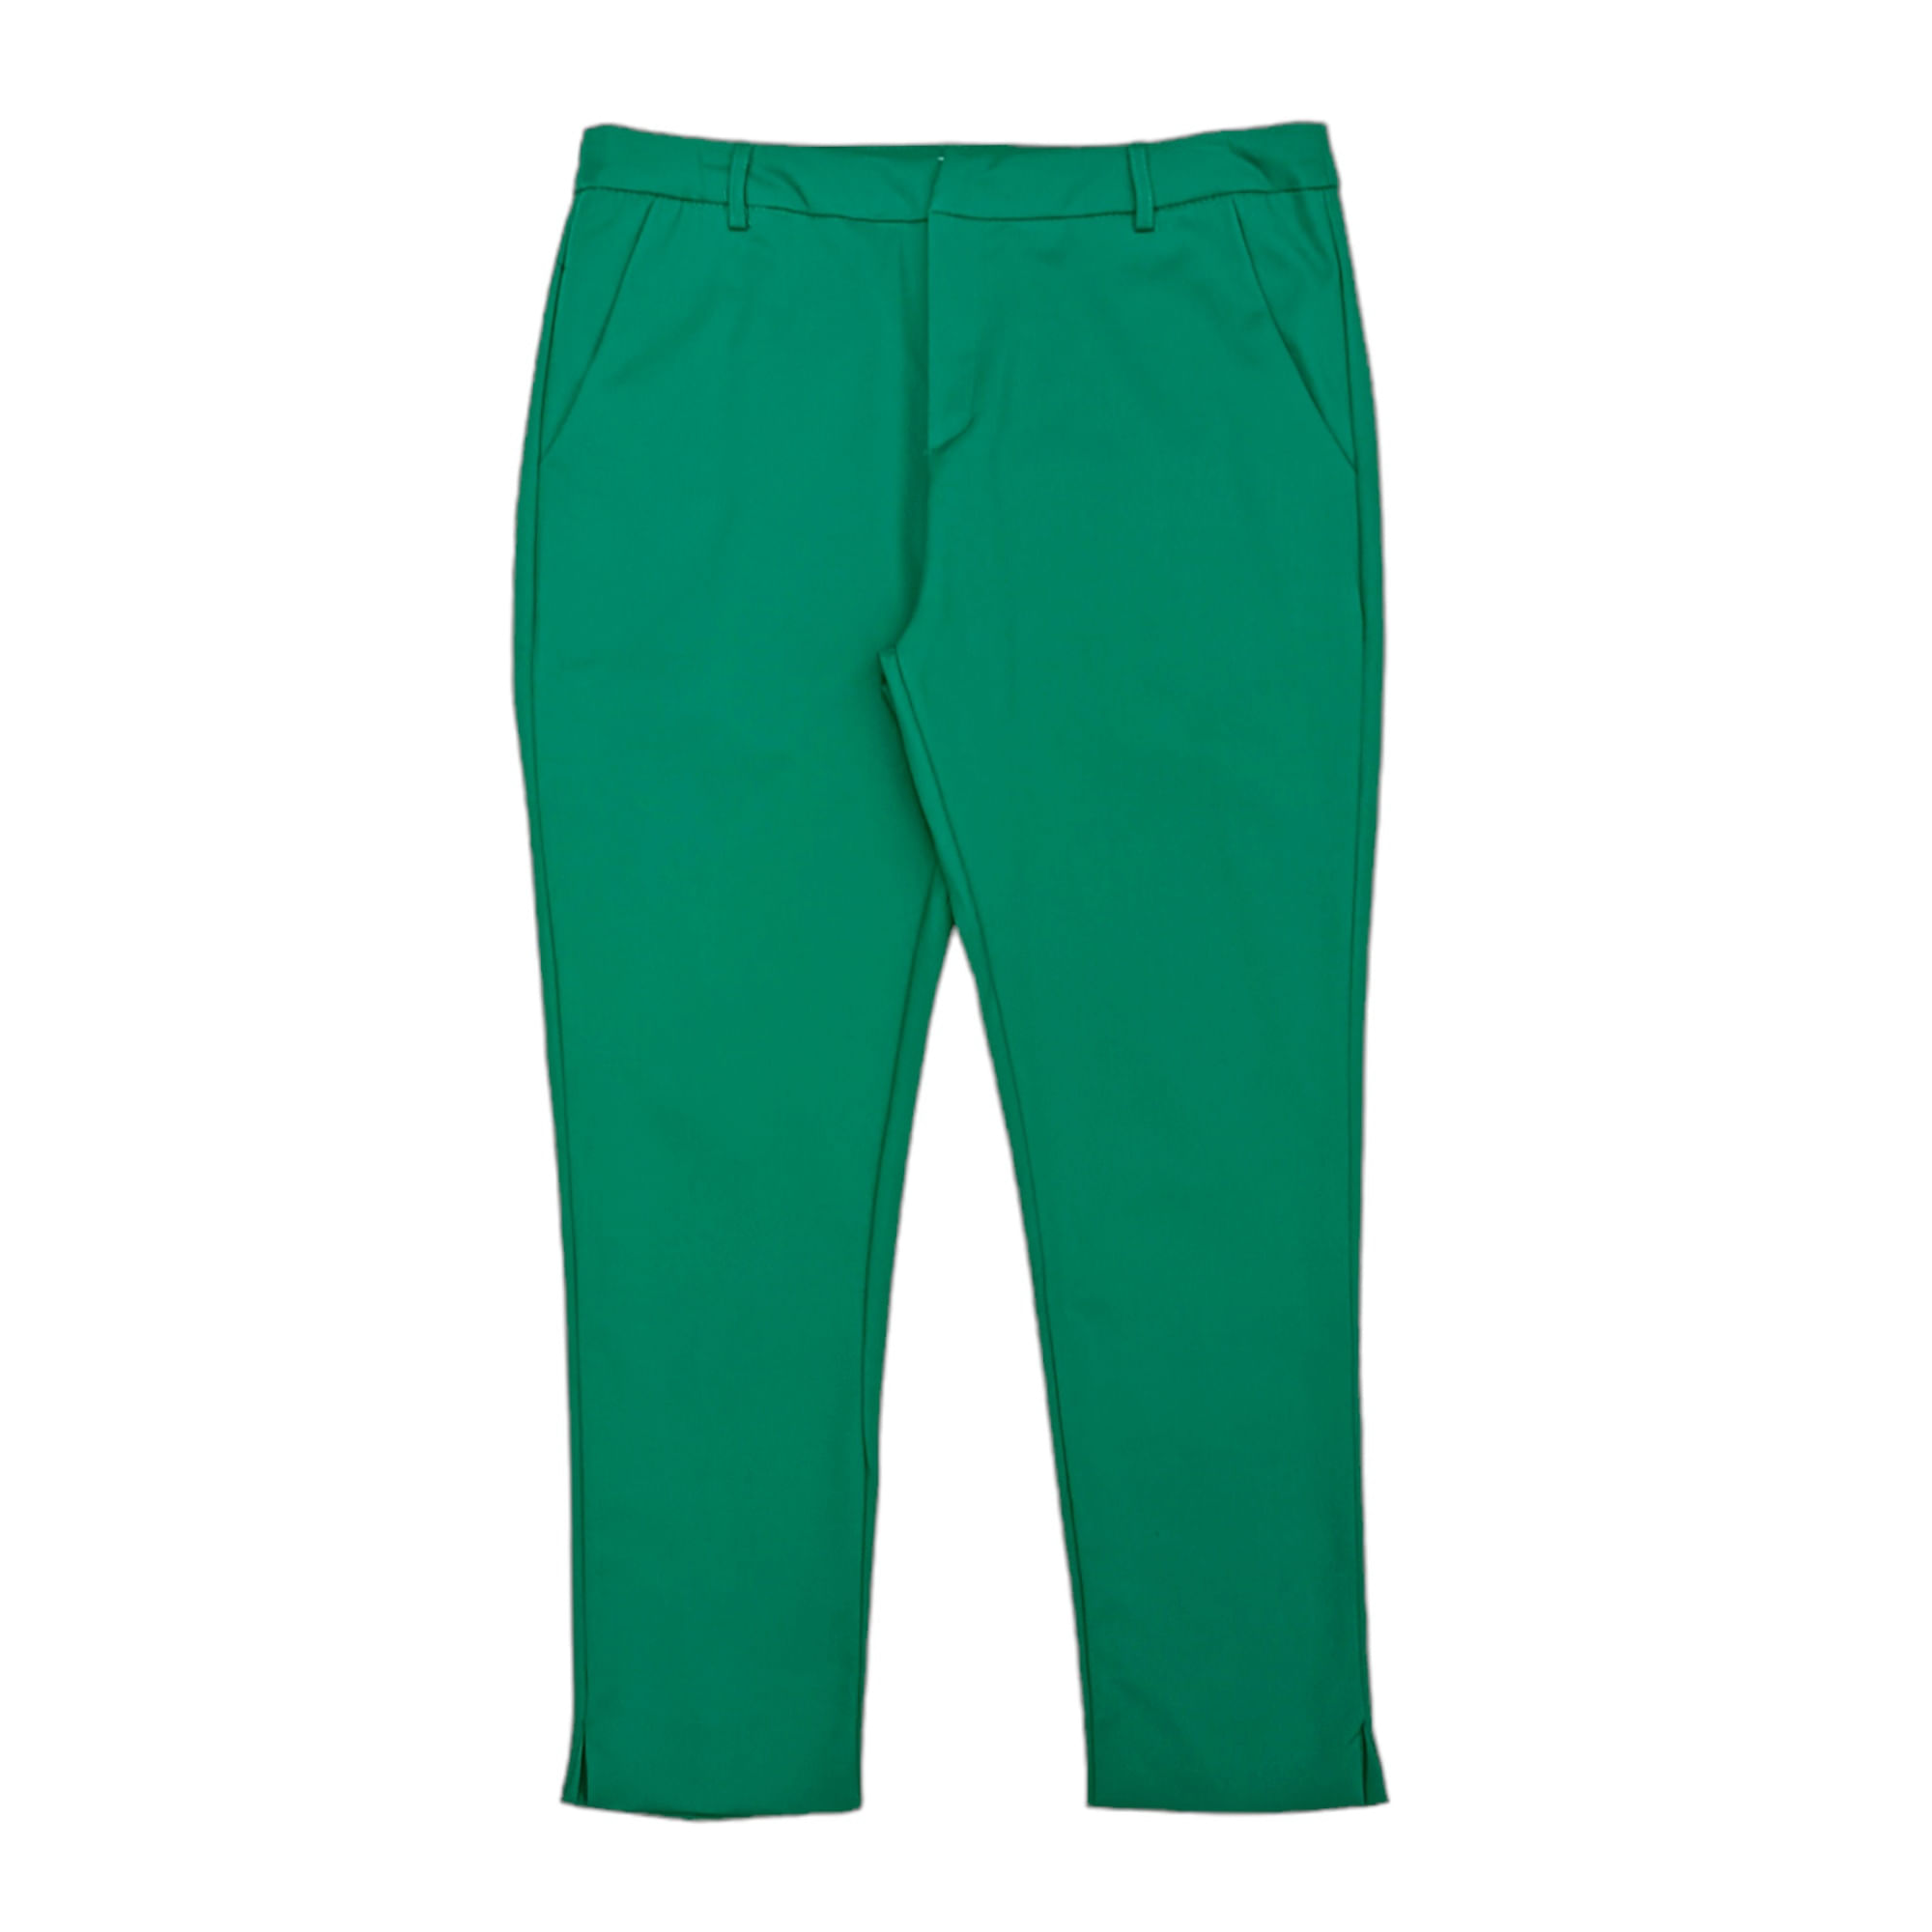 Pantalon de Vestir Verde Elastizado Cod. 1170539 - Nice